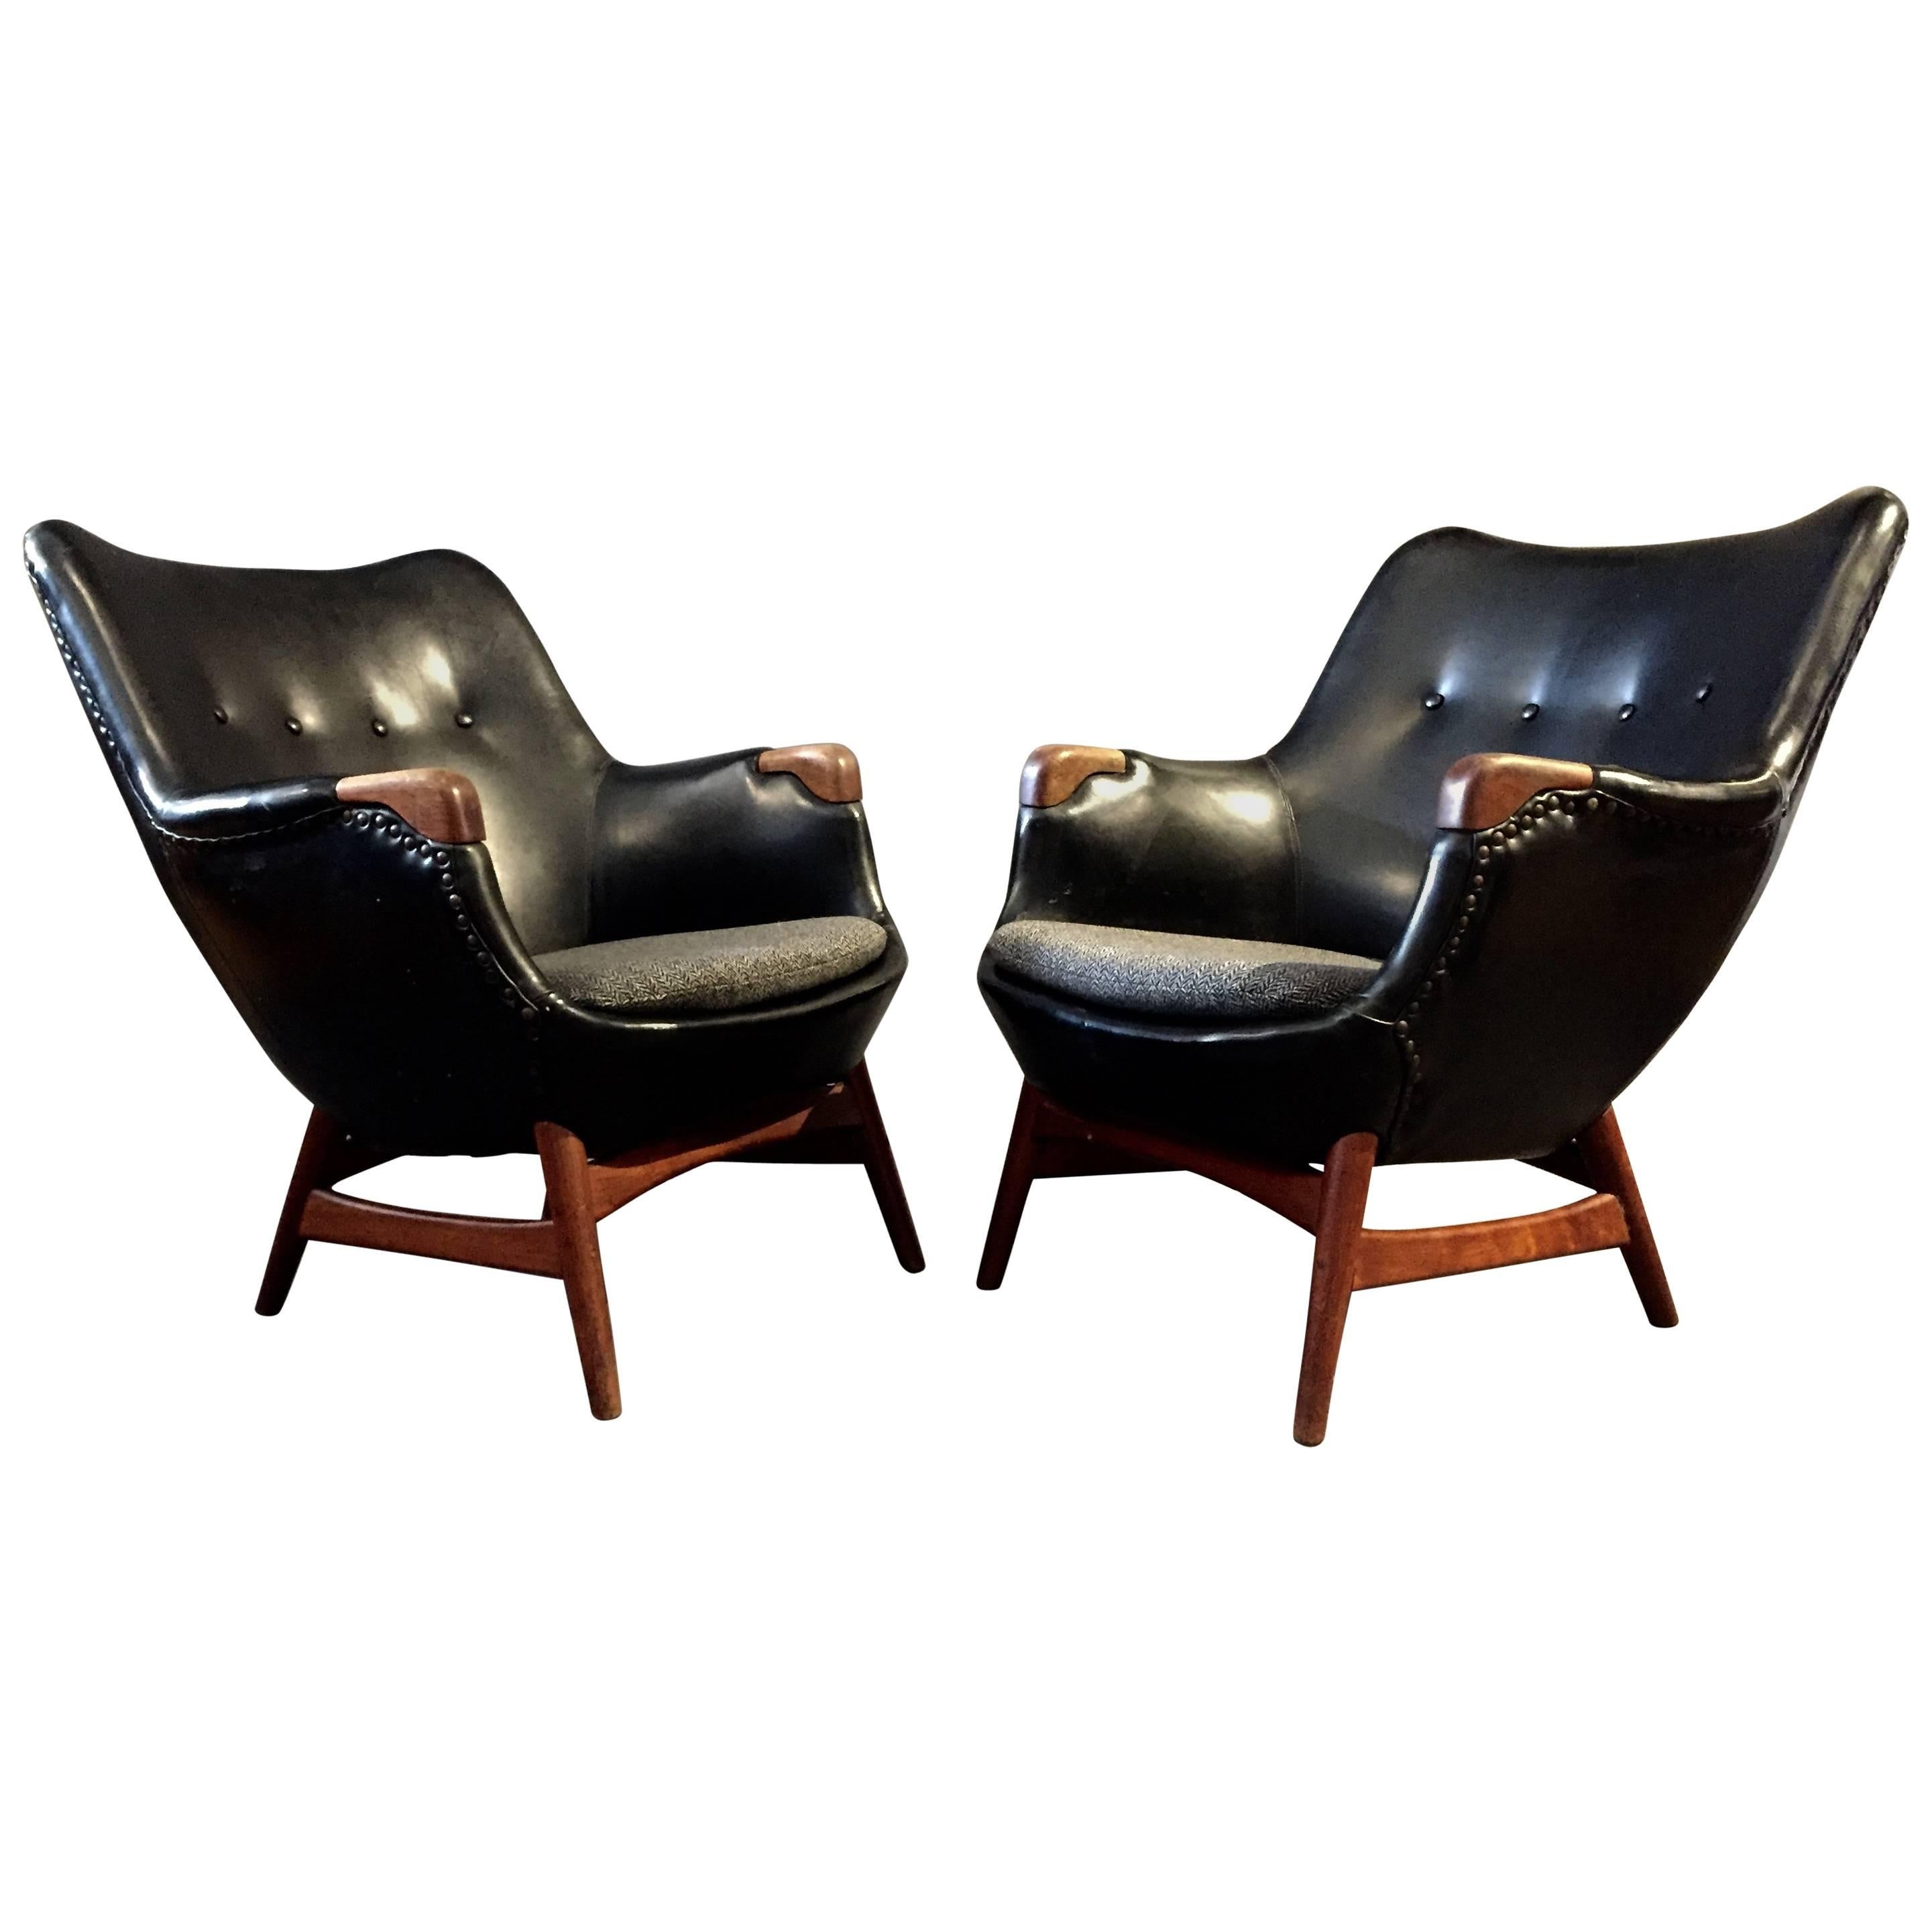 Pair of Erling Torvits Lounge Chairs, Black Naugahyde and Teak, Denmark, 1956